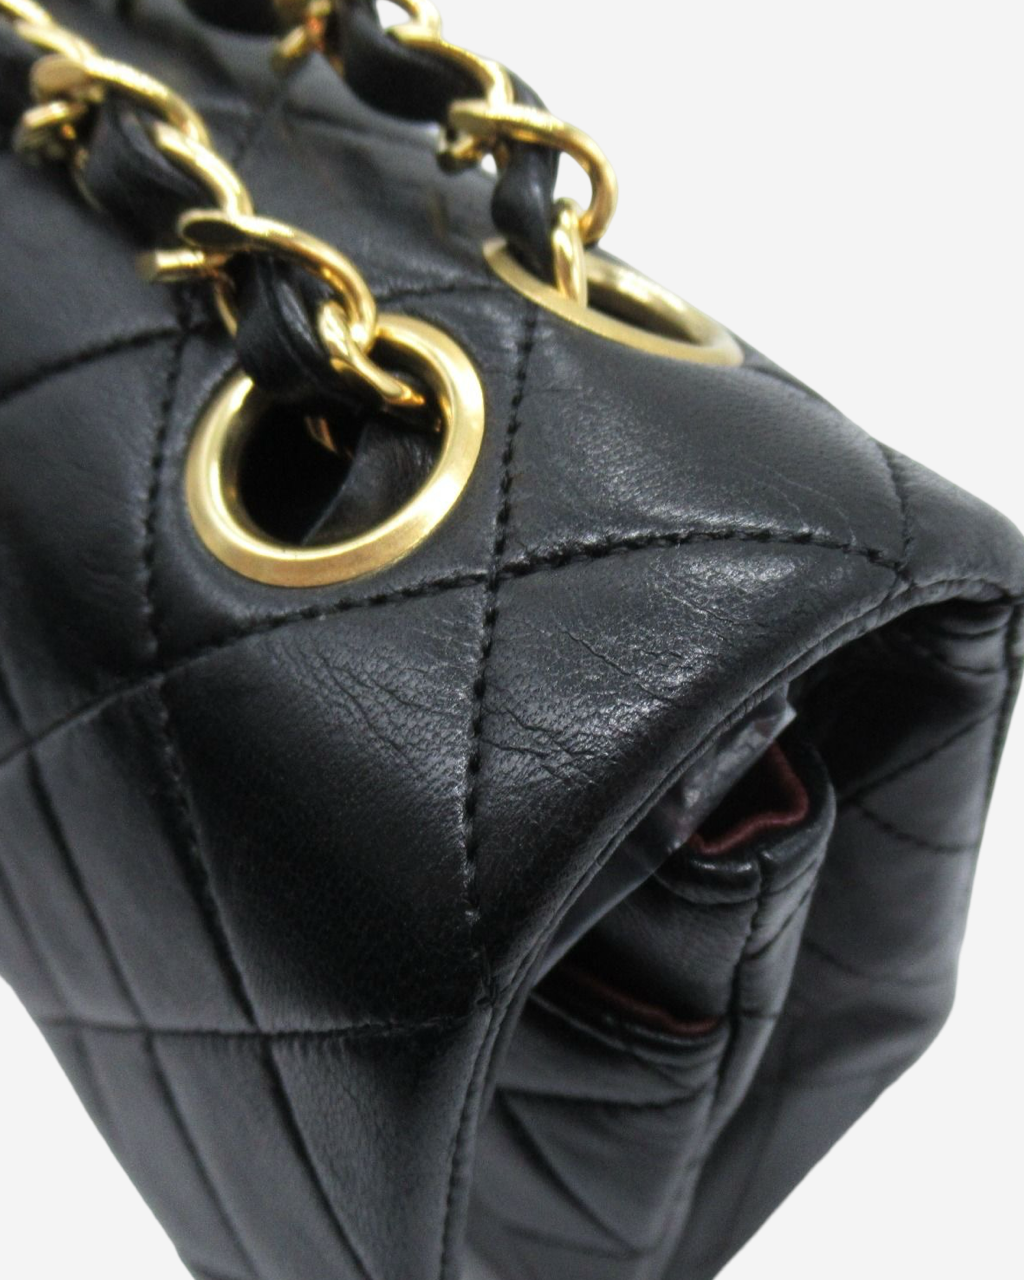 Chanel Classic Double Flap Bag